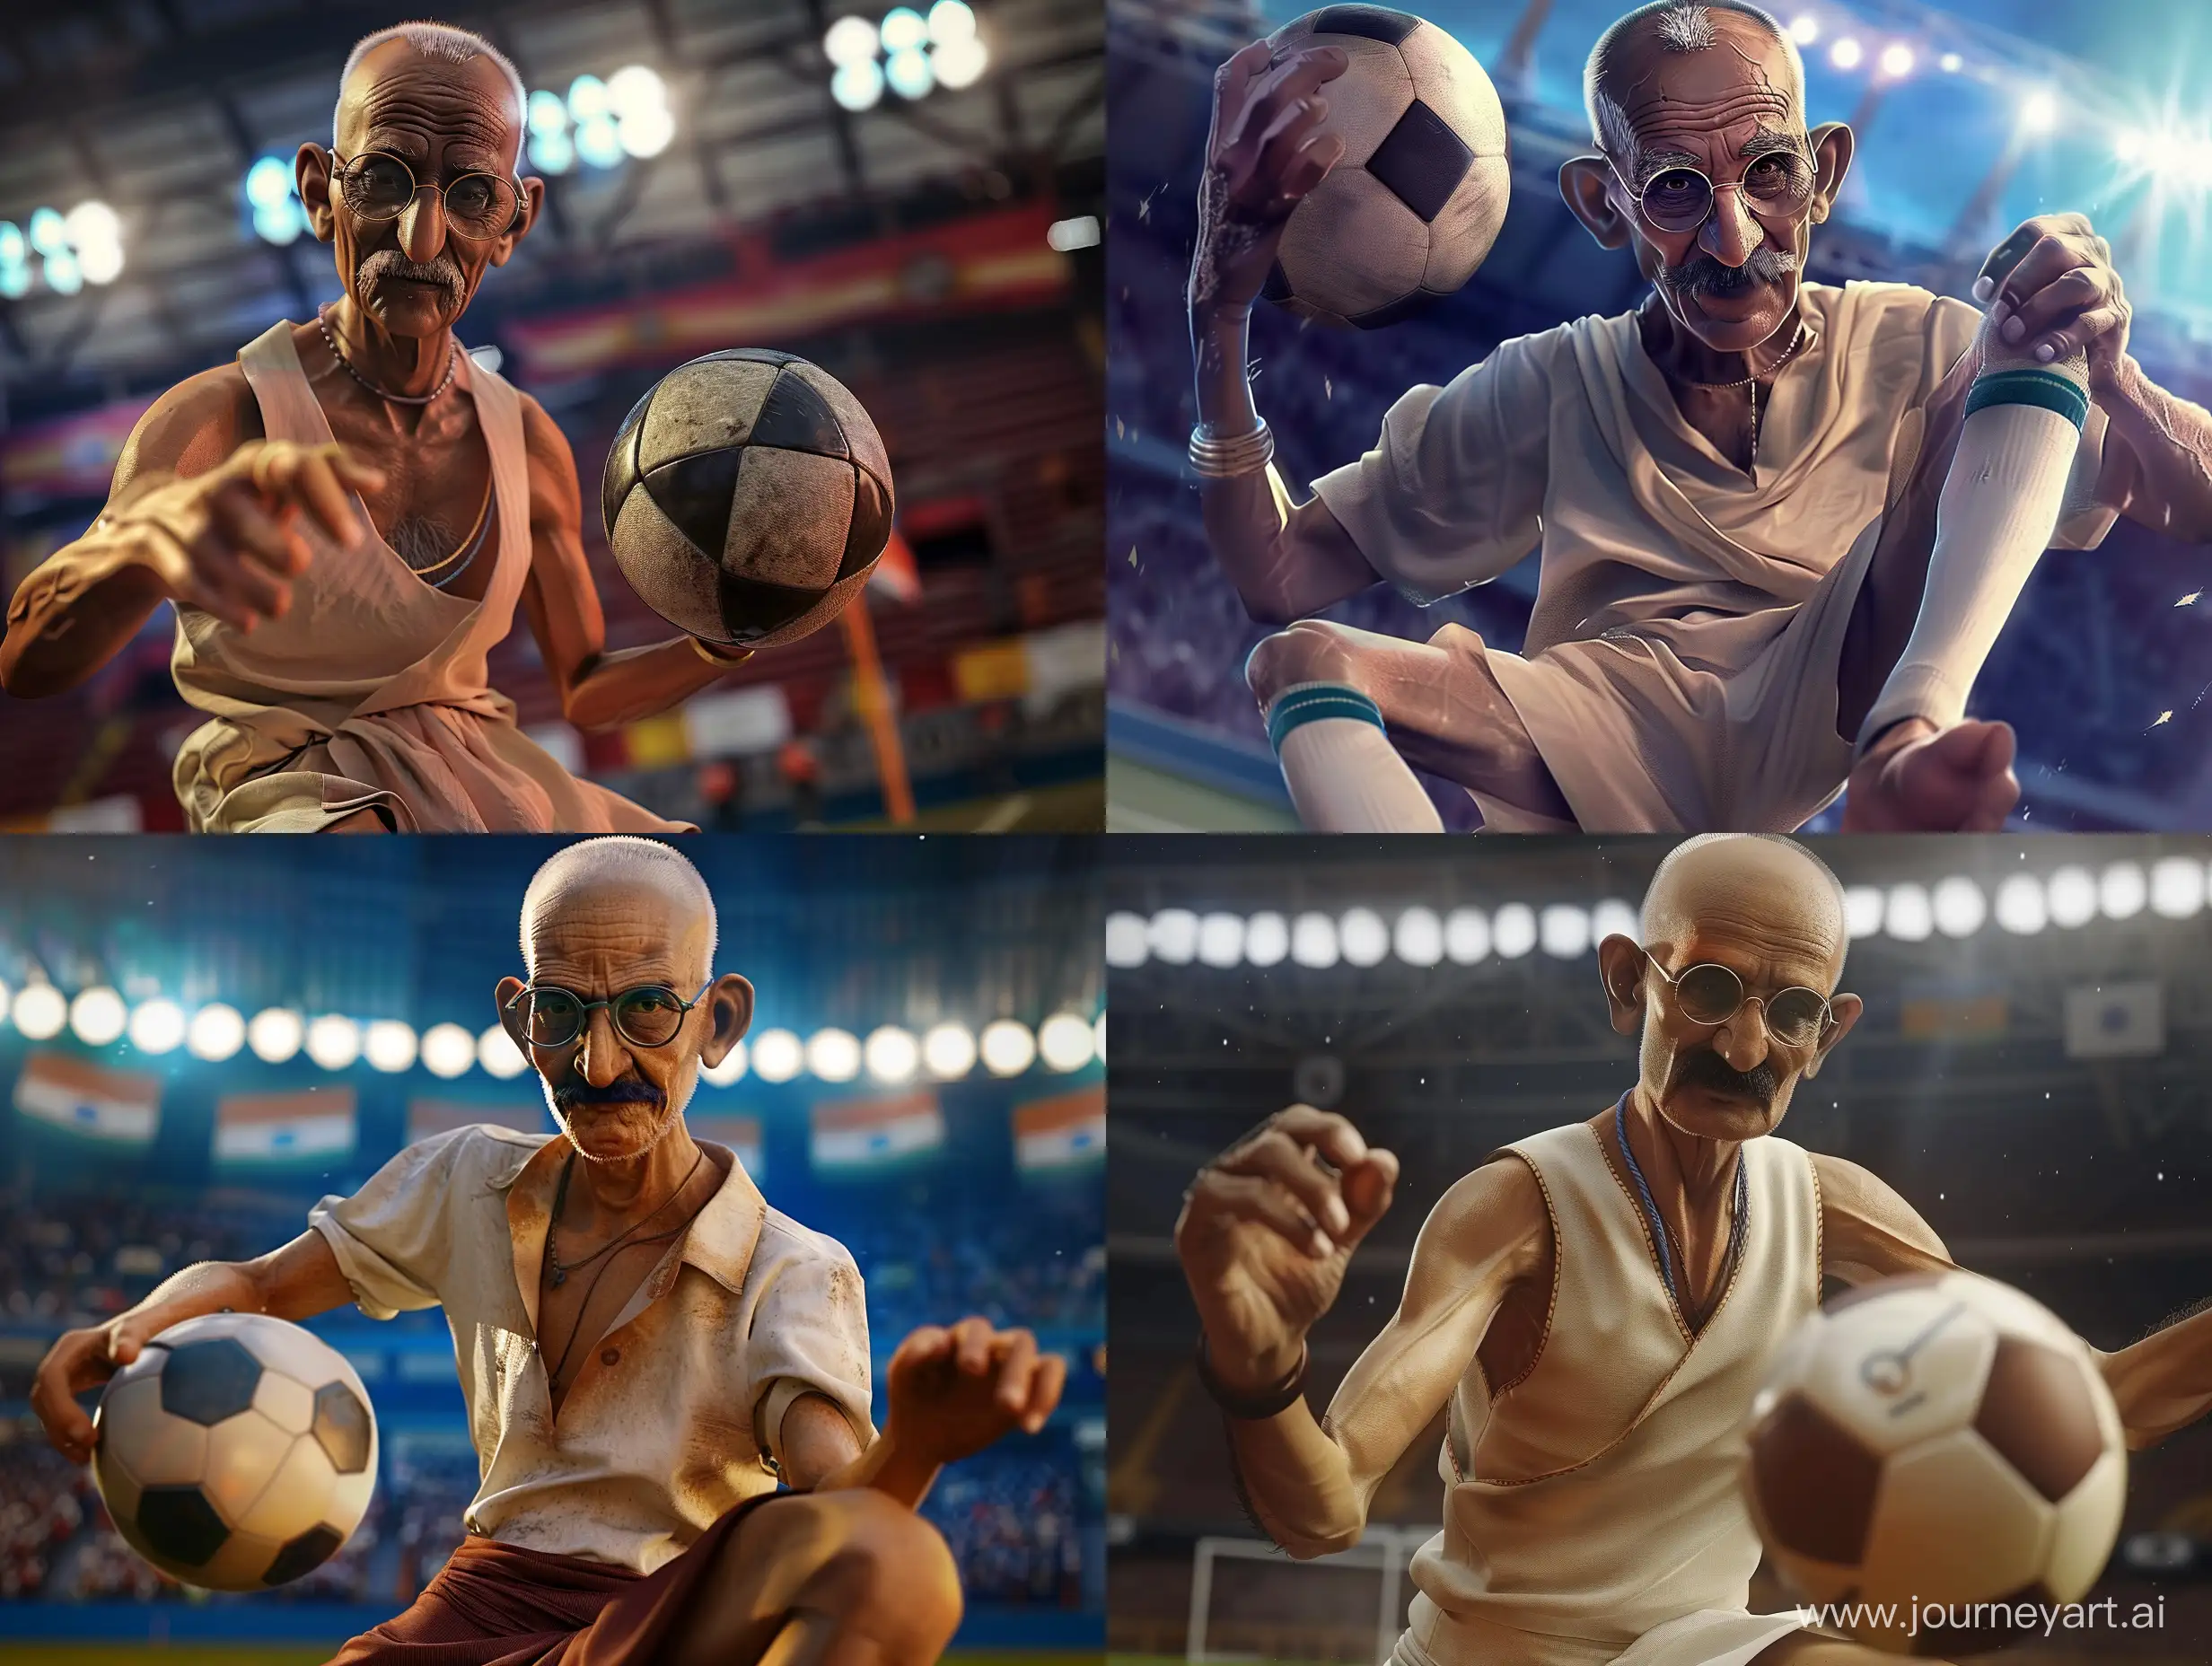 Mahatma-Gandhi-Playing-Football-in-Sportswear-and-Glasses-in-Stadium